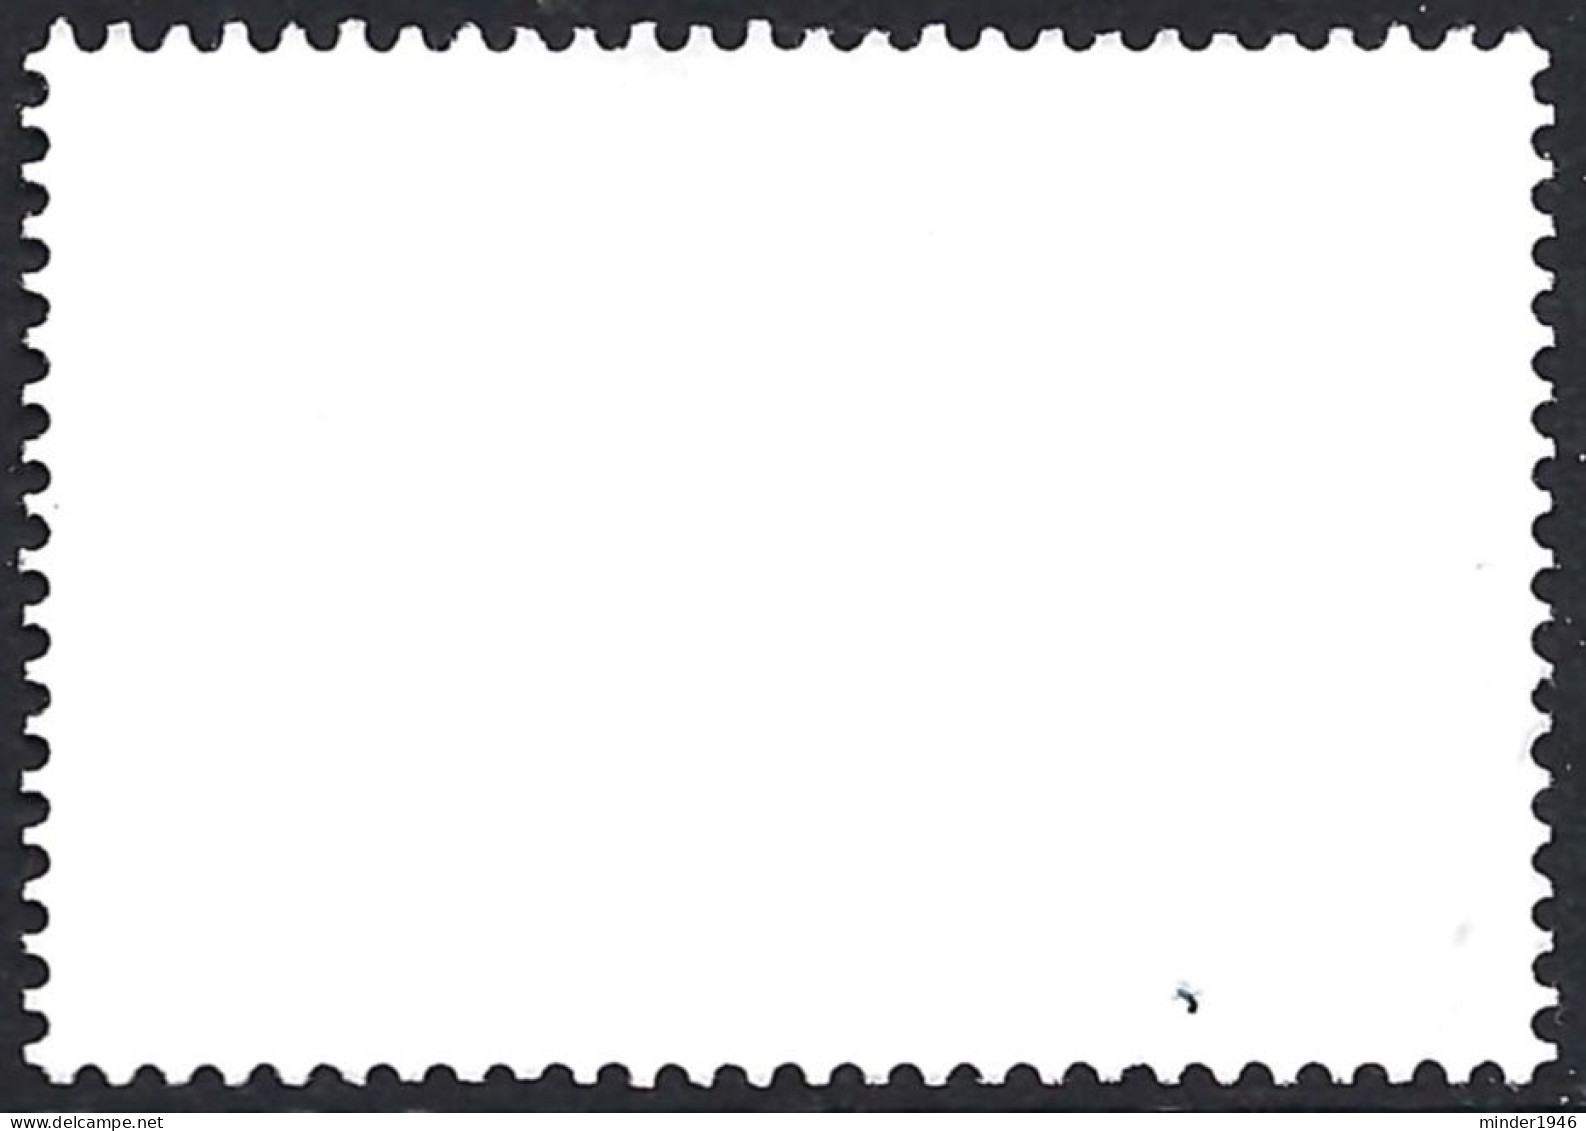 AUSTRALIAN ANTARCTIC TERRITORY (AAT) 2004 50c, Multicoloured, 50th Anniversary Mawson Station-Mawson Station FU - Used Stamps